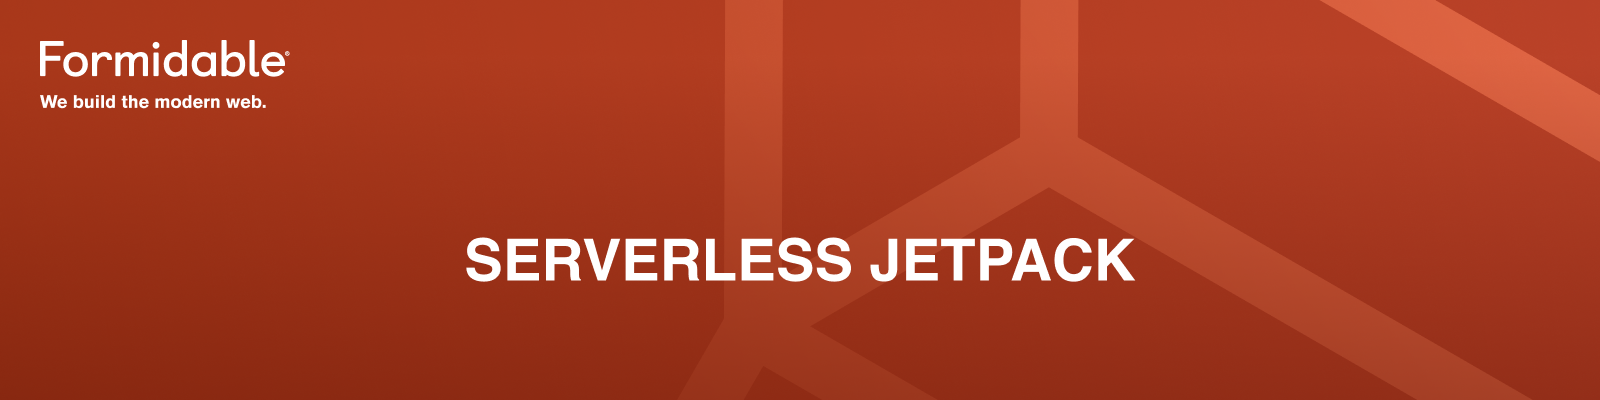 serverless-jetpack-Hero.png